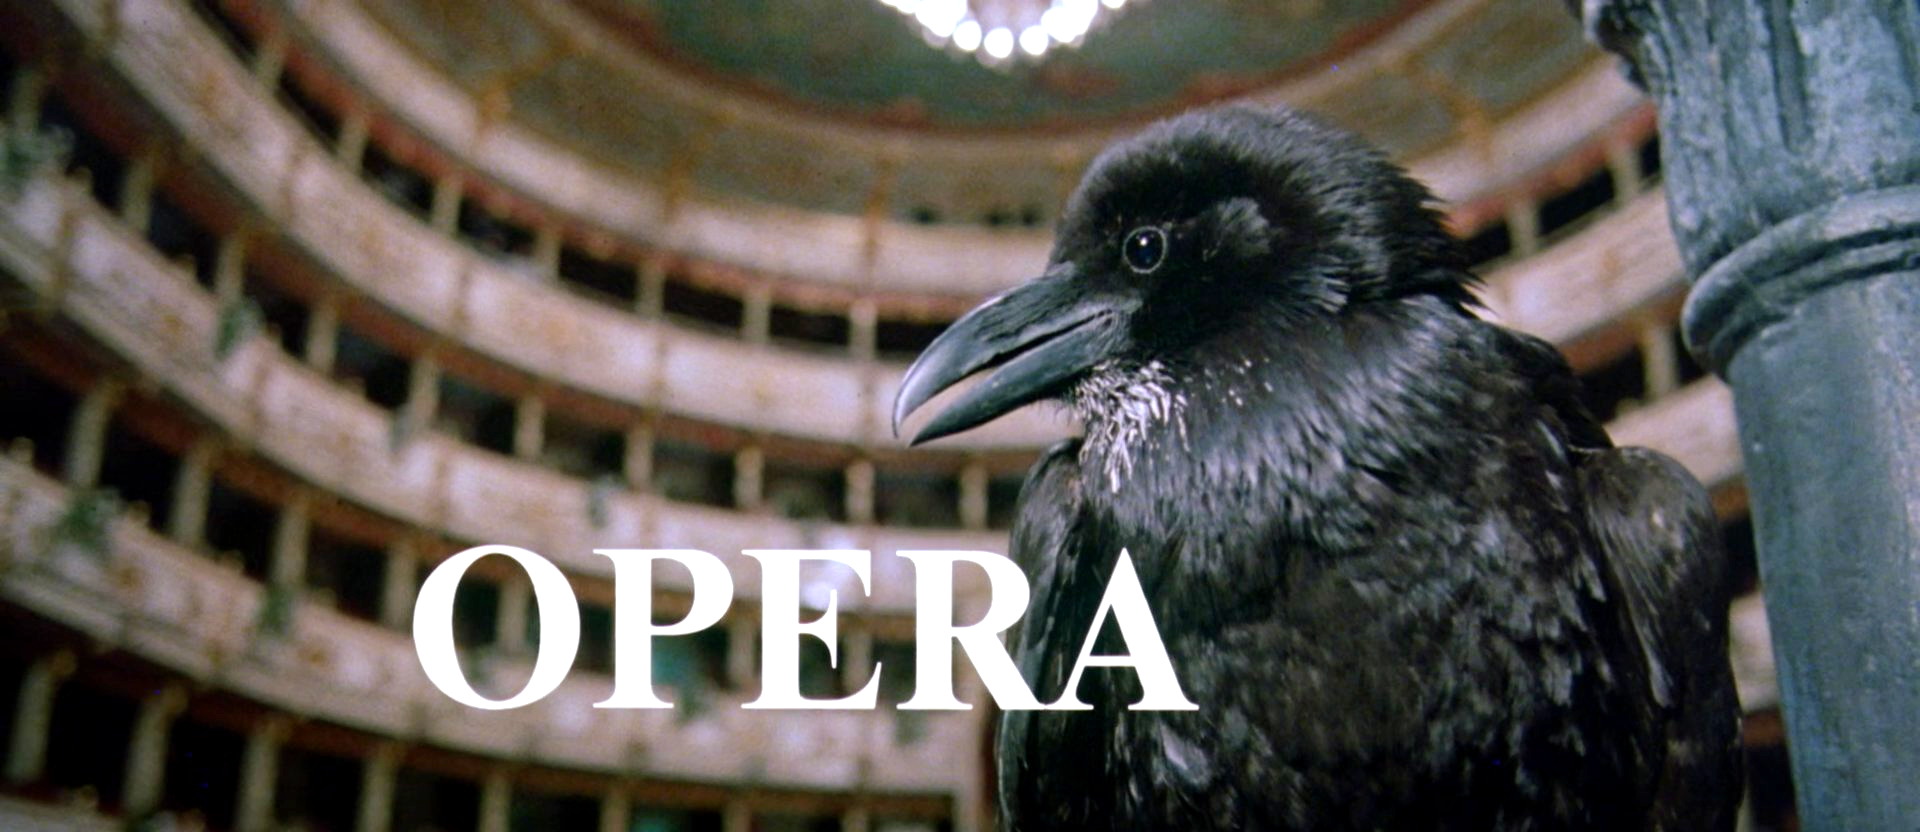 Opera (1987) TItle.jpg